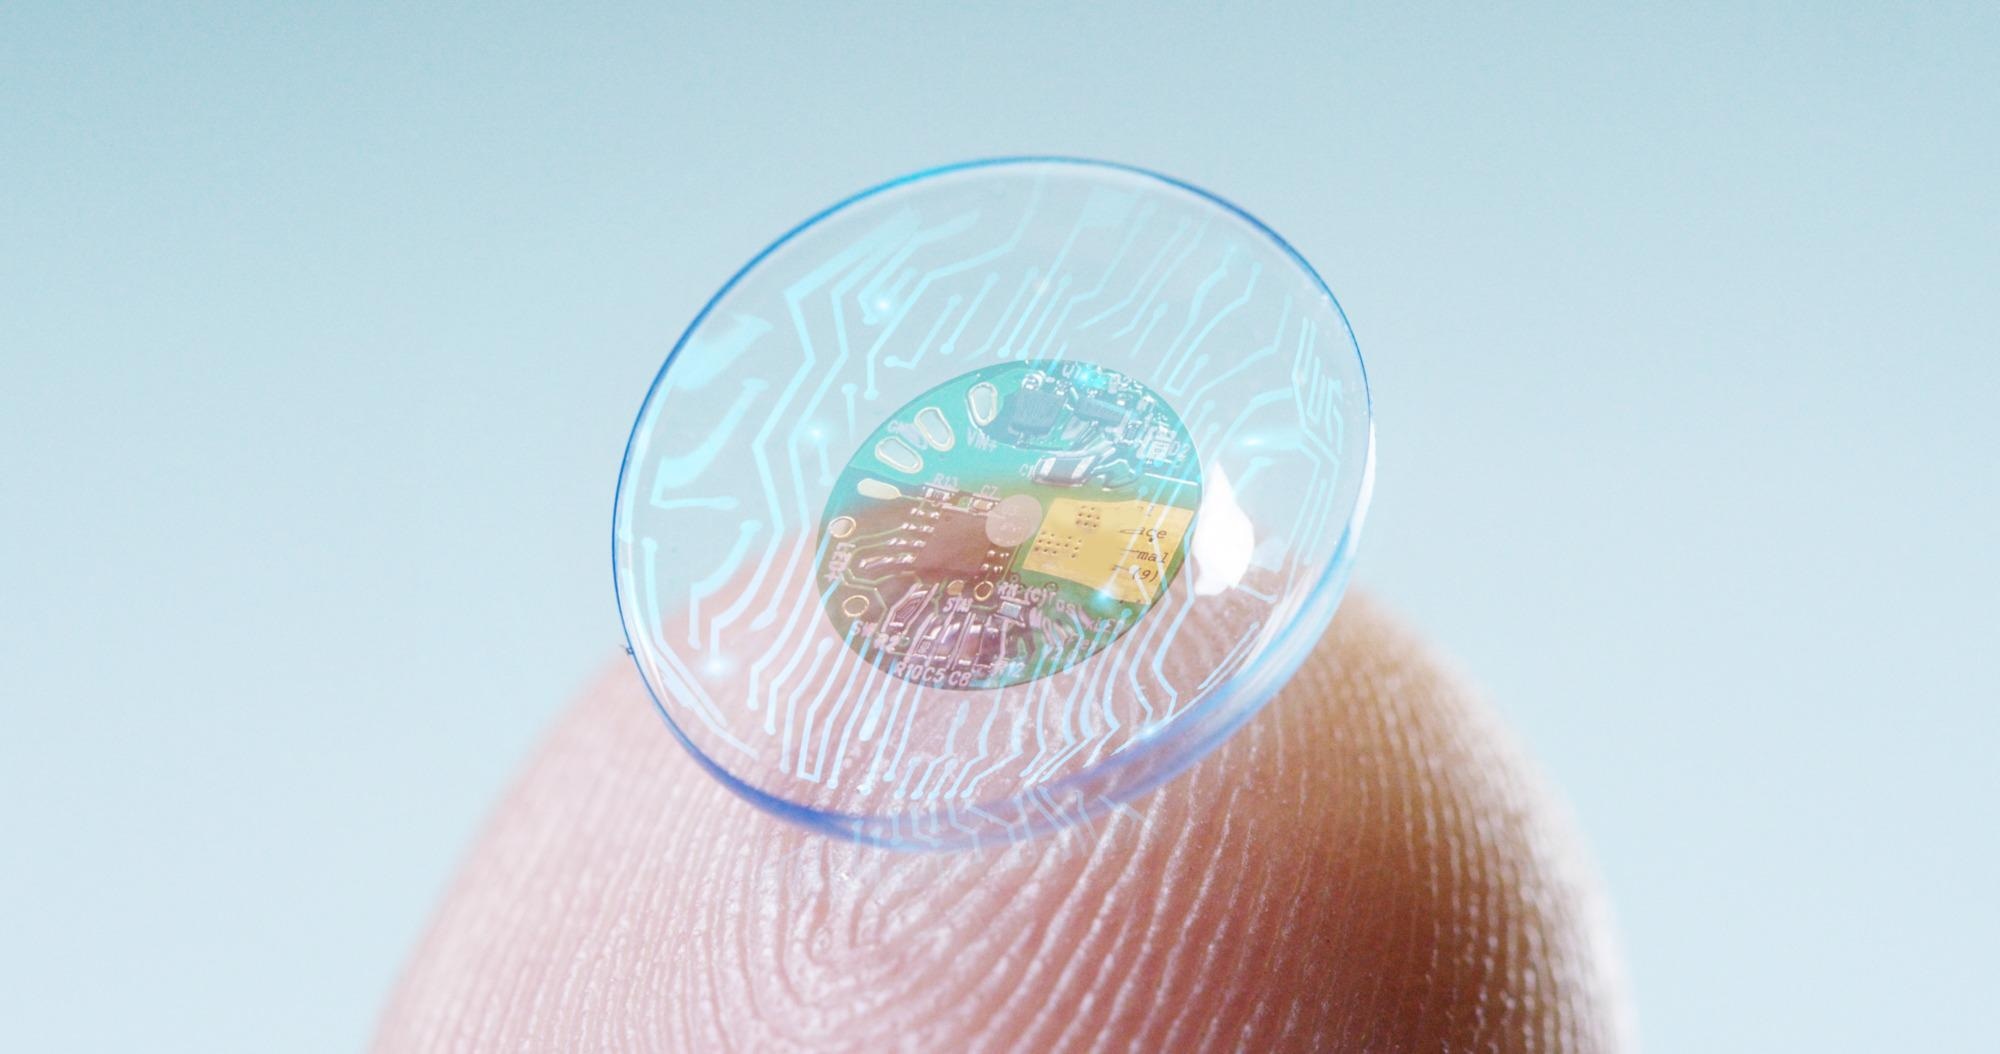 Study Demonstrates Novel Multifunctional Ultrathin Contact Lens Sensor